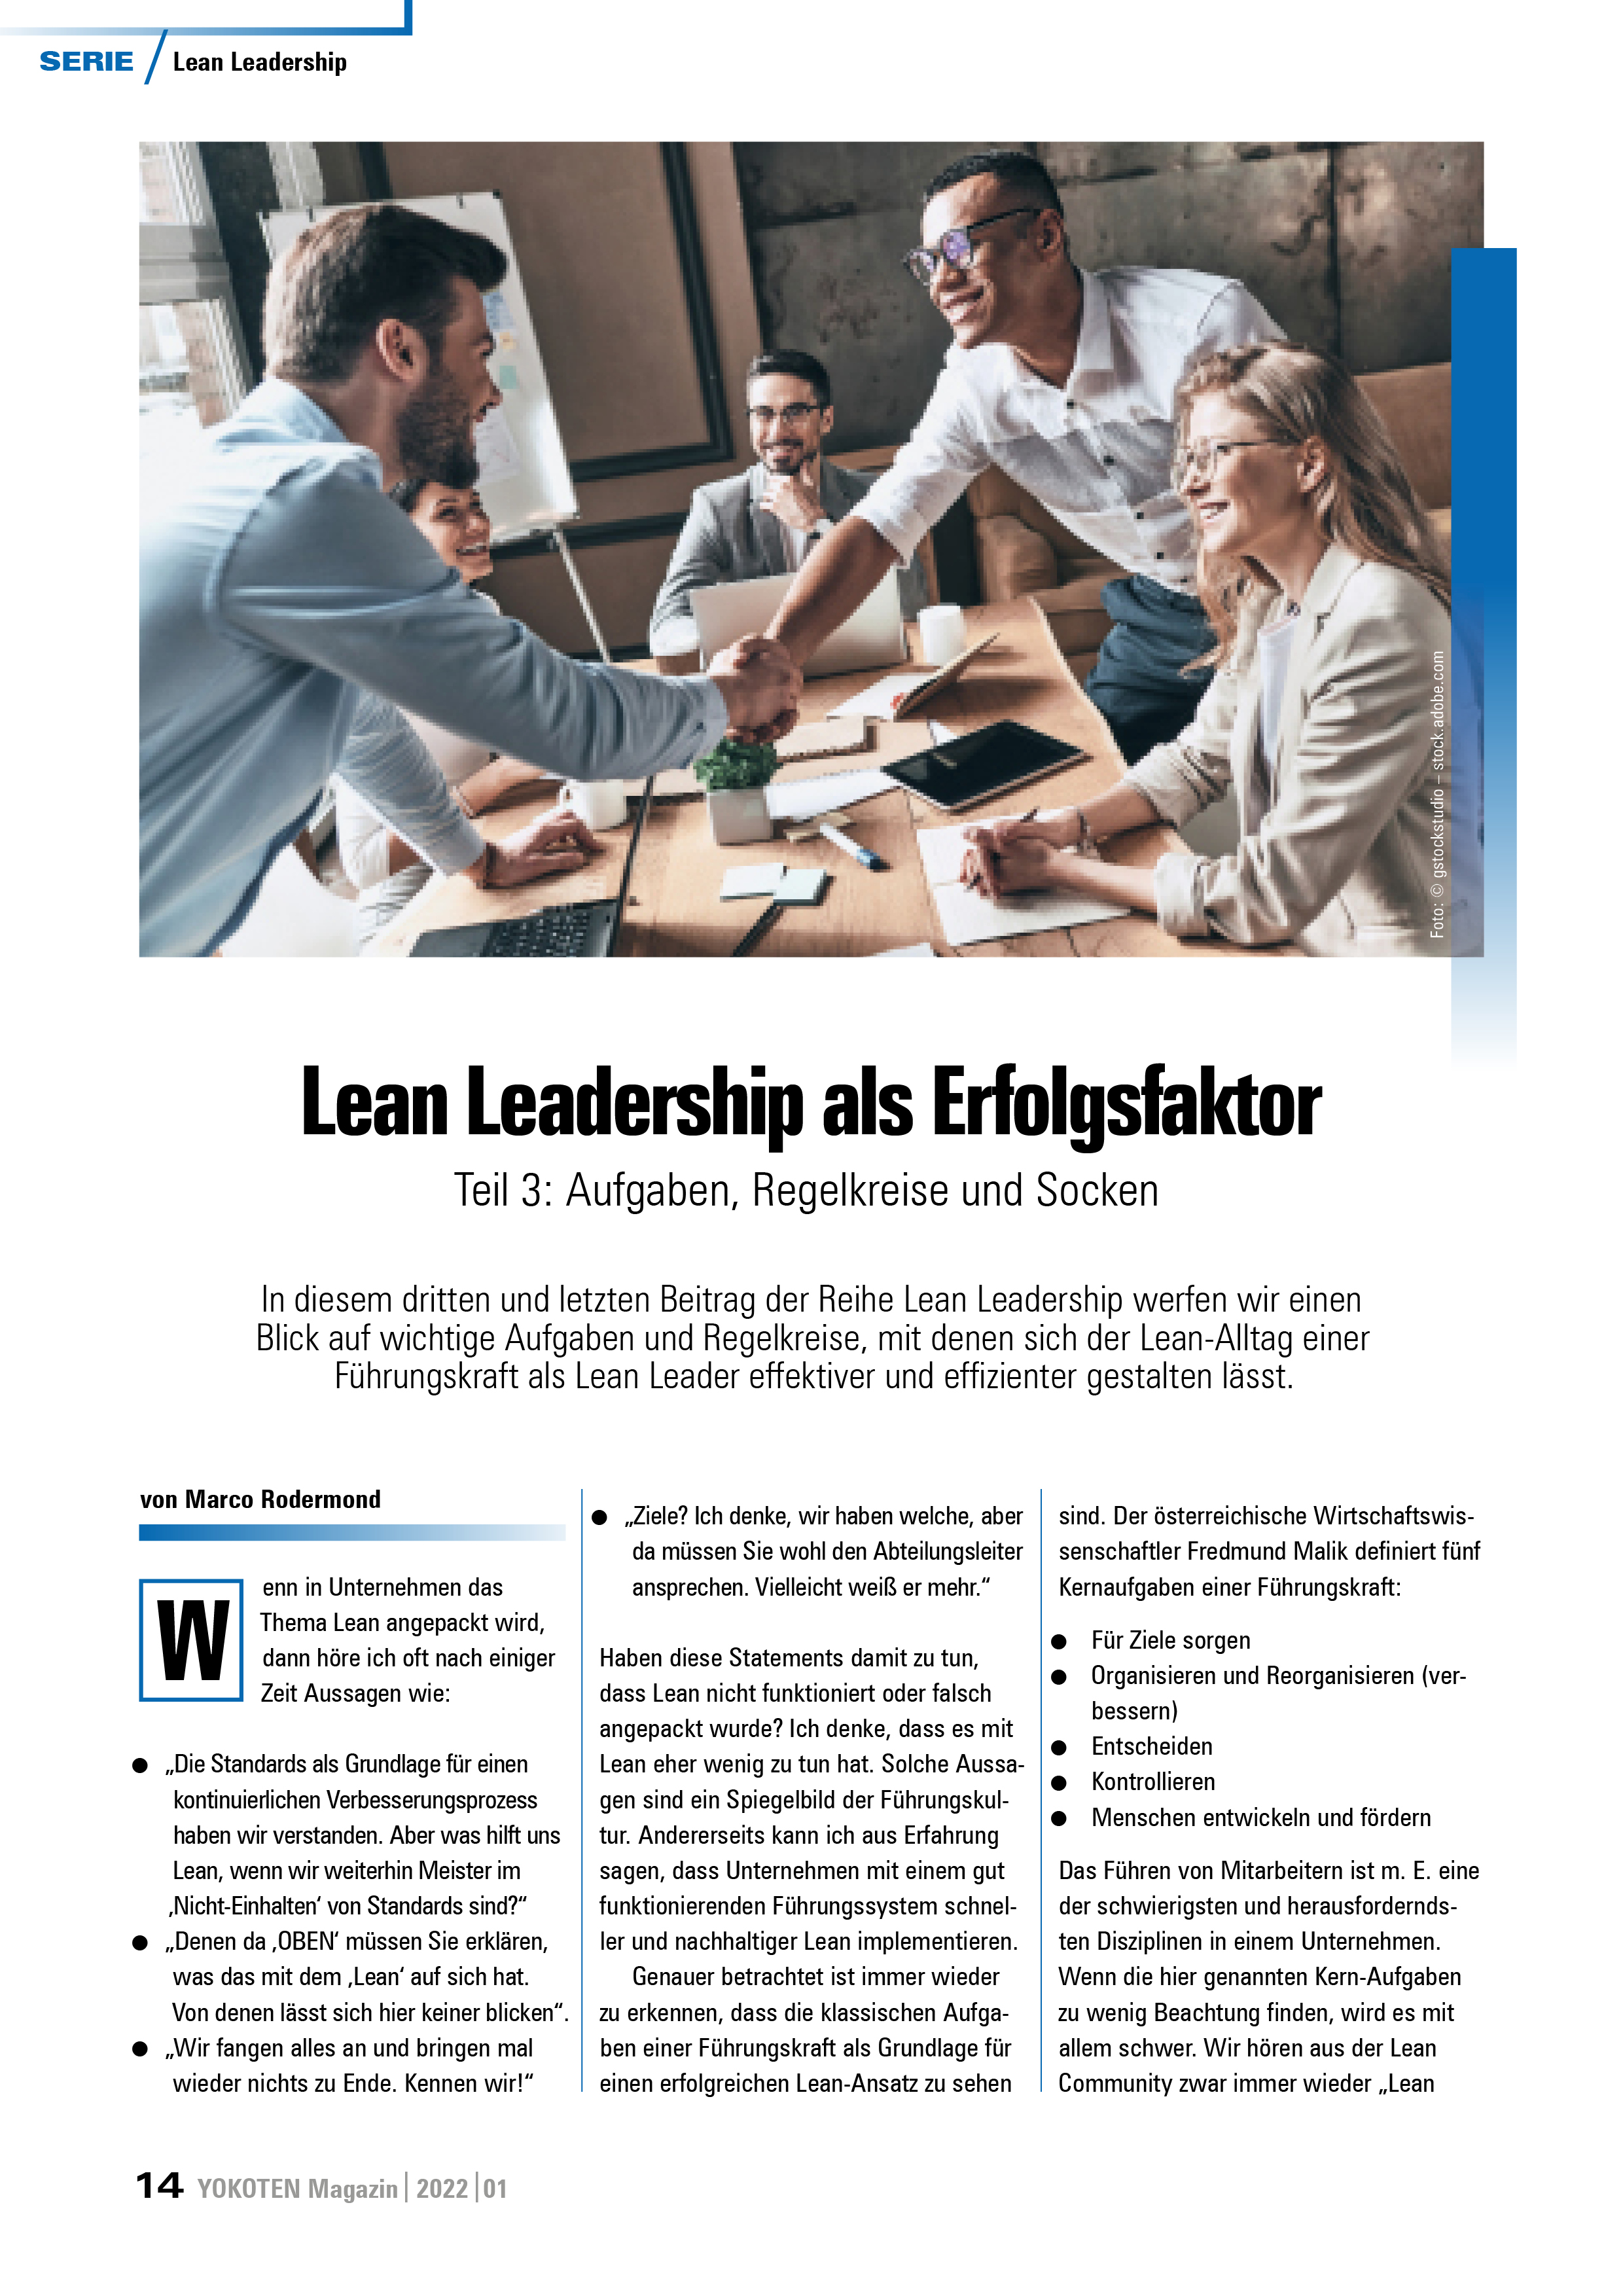 Lean Leadership als Erfolgsfaktor - Artikel aus Fachmagazin YOKOTEN 2022-01